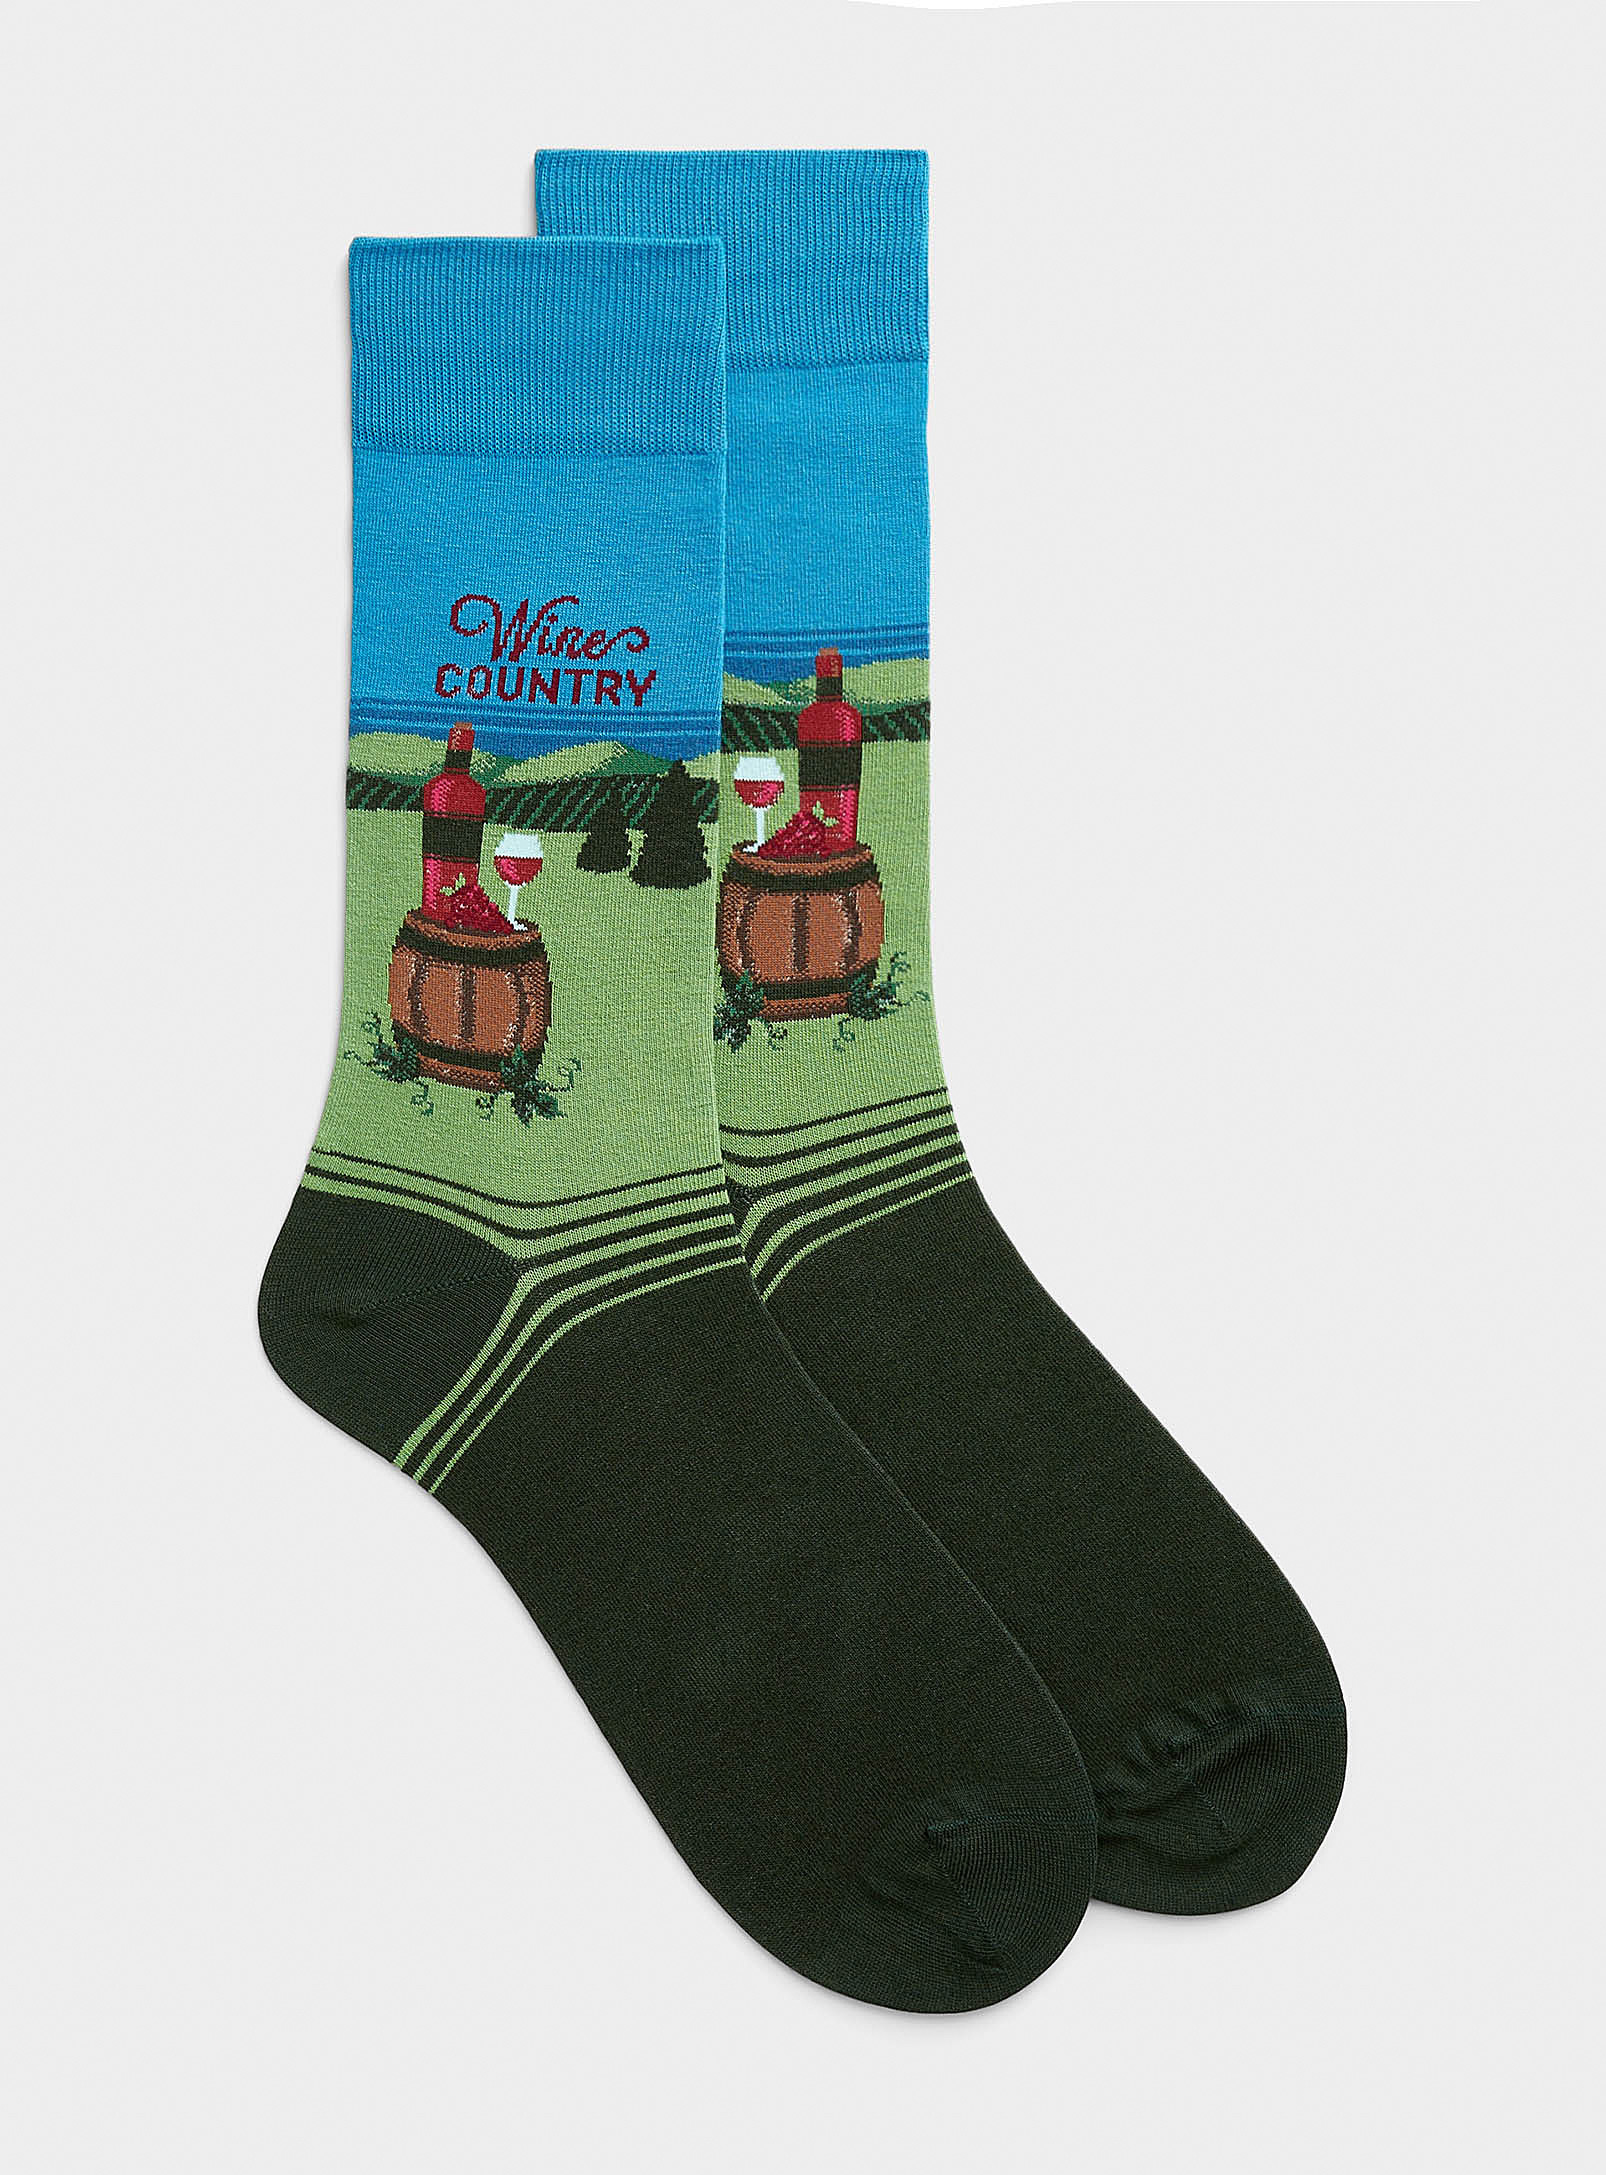 Hot Sox - Men's Vineyard sock